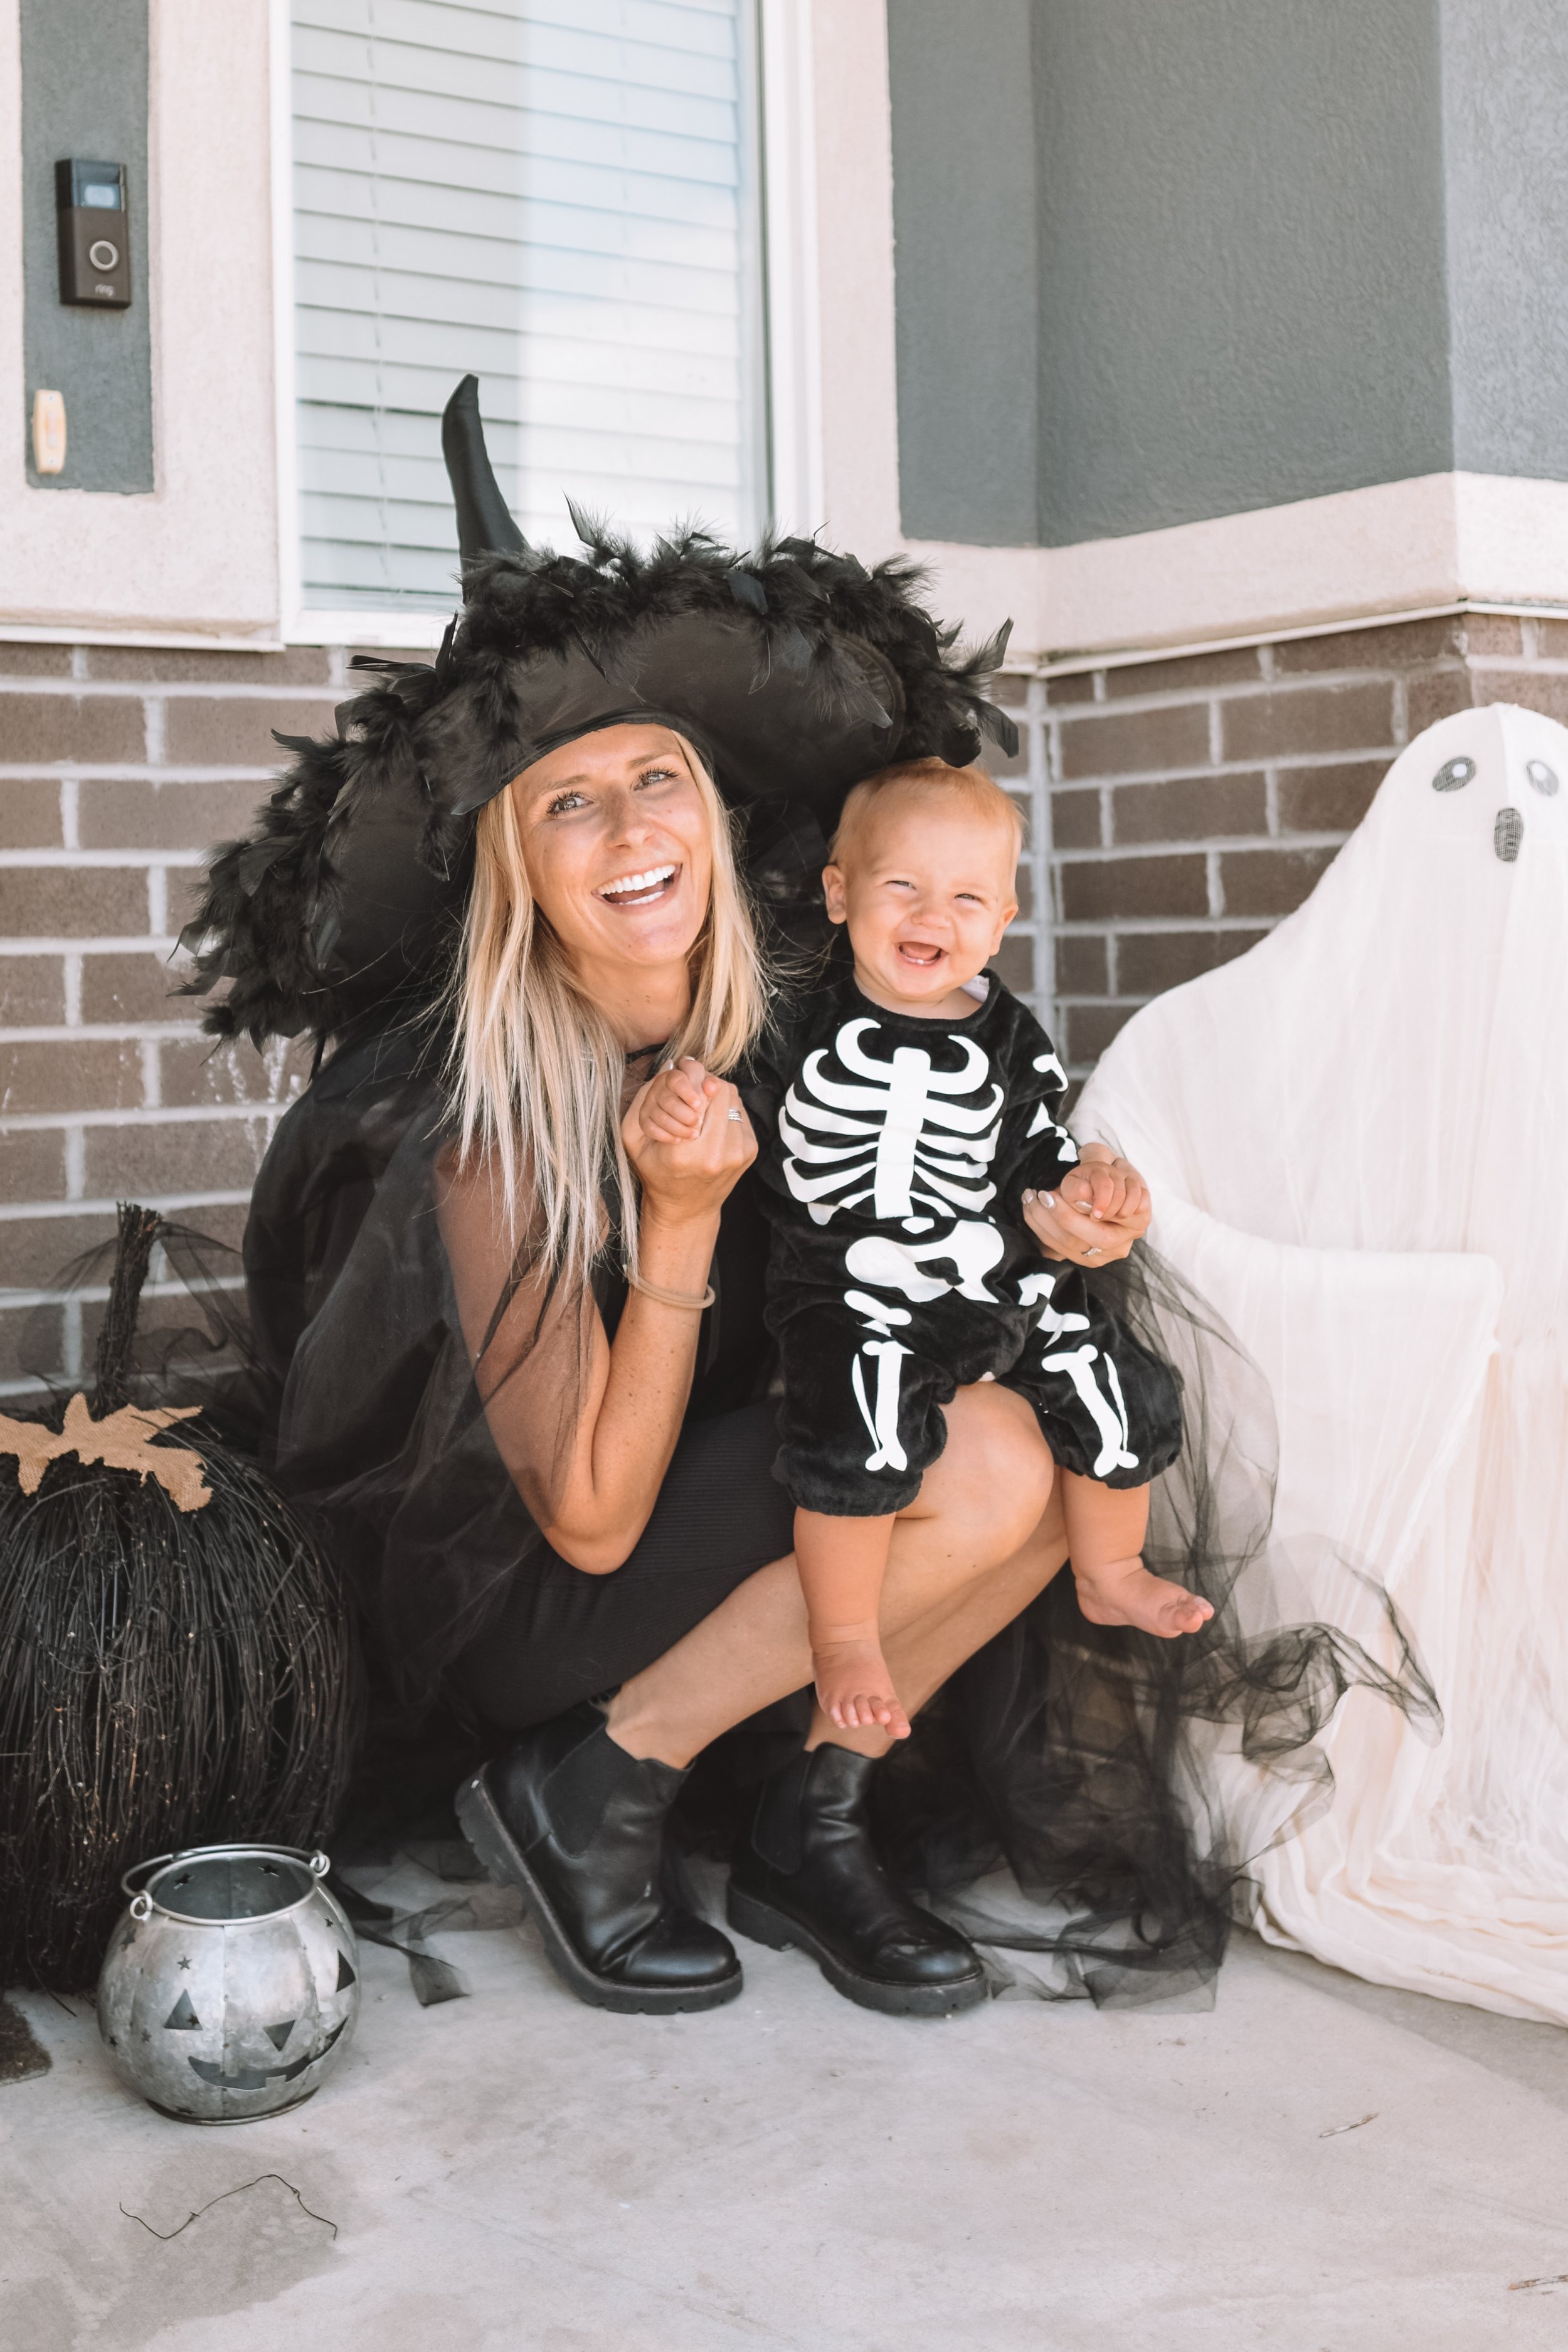 Family Halloween Costume Ideas